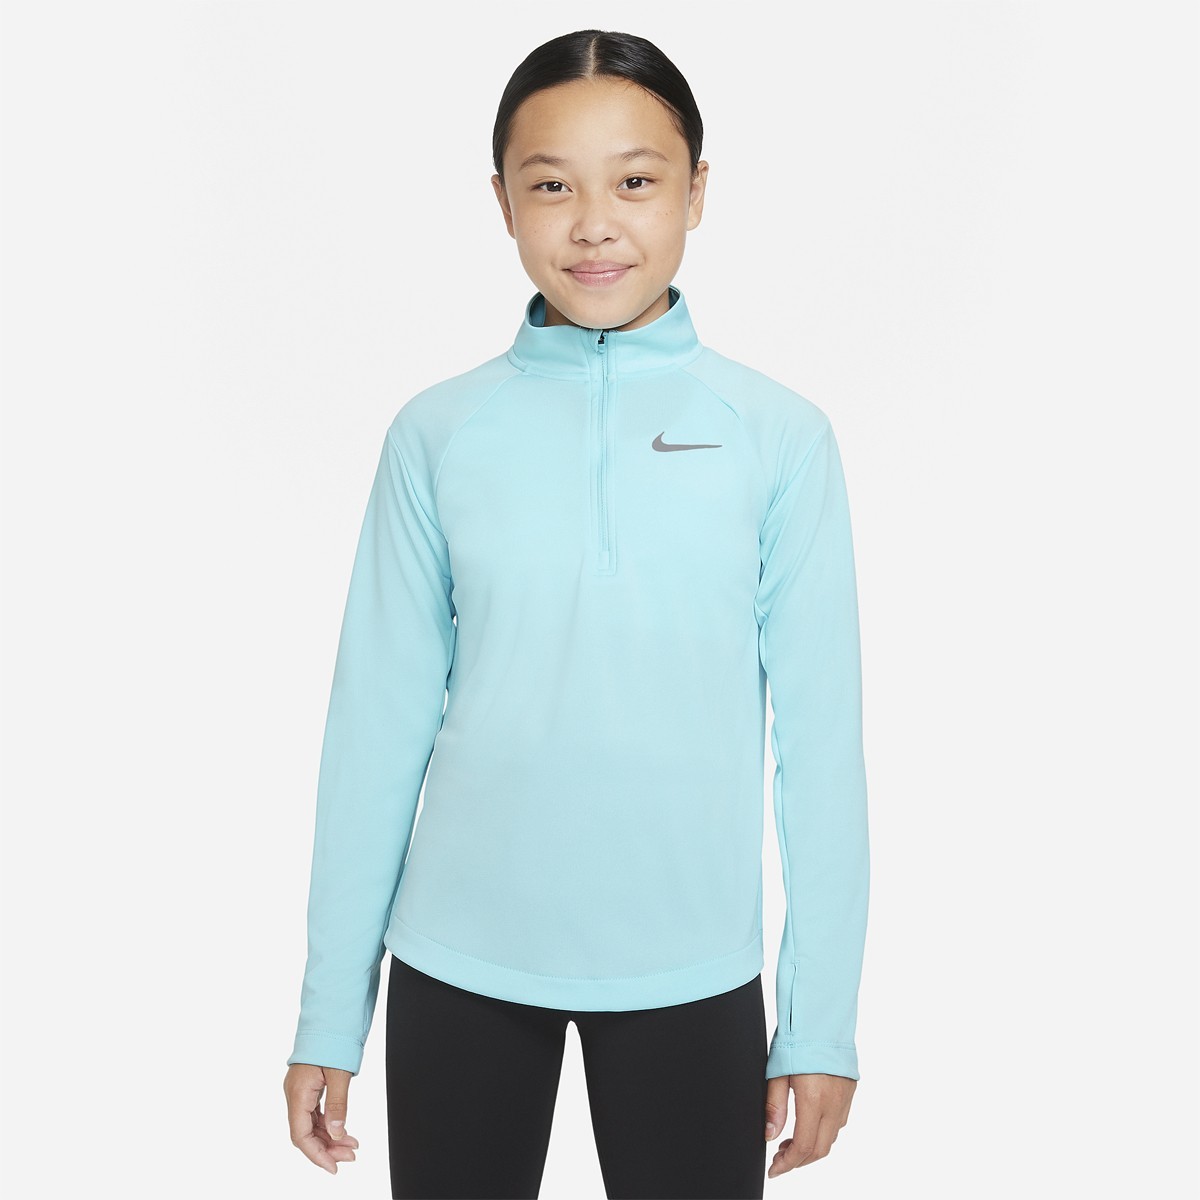 Теннисная футболка детская Nike Girls 1/2 Zip Long Sleeve Top blue